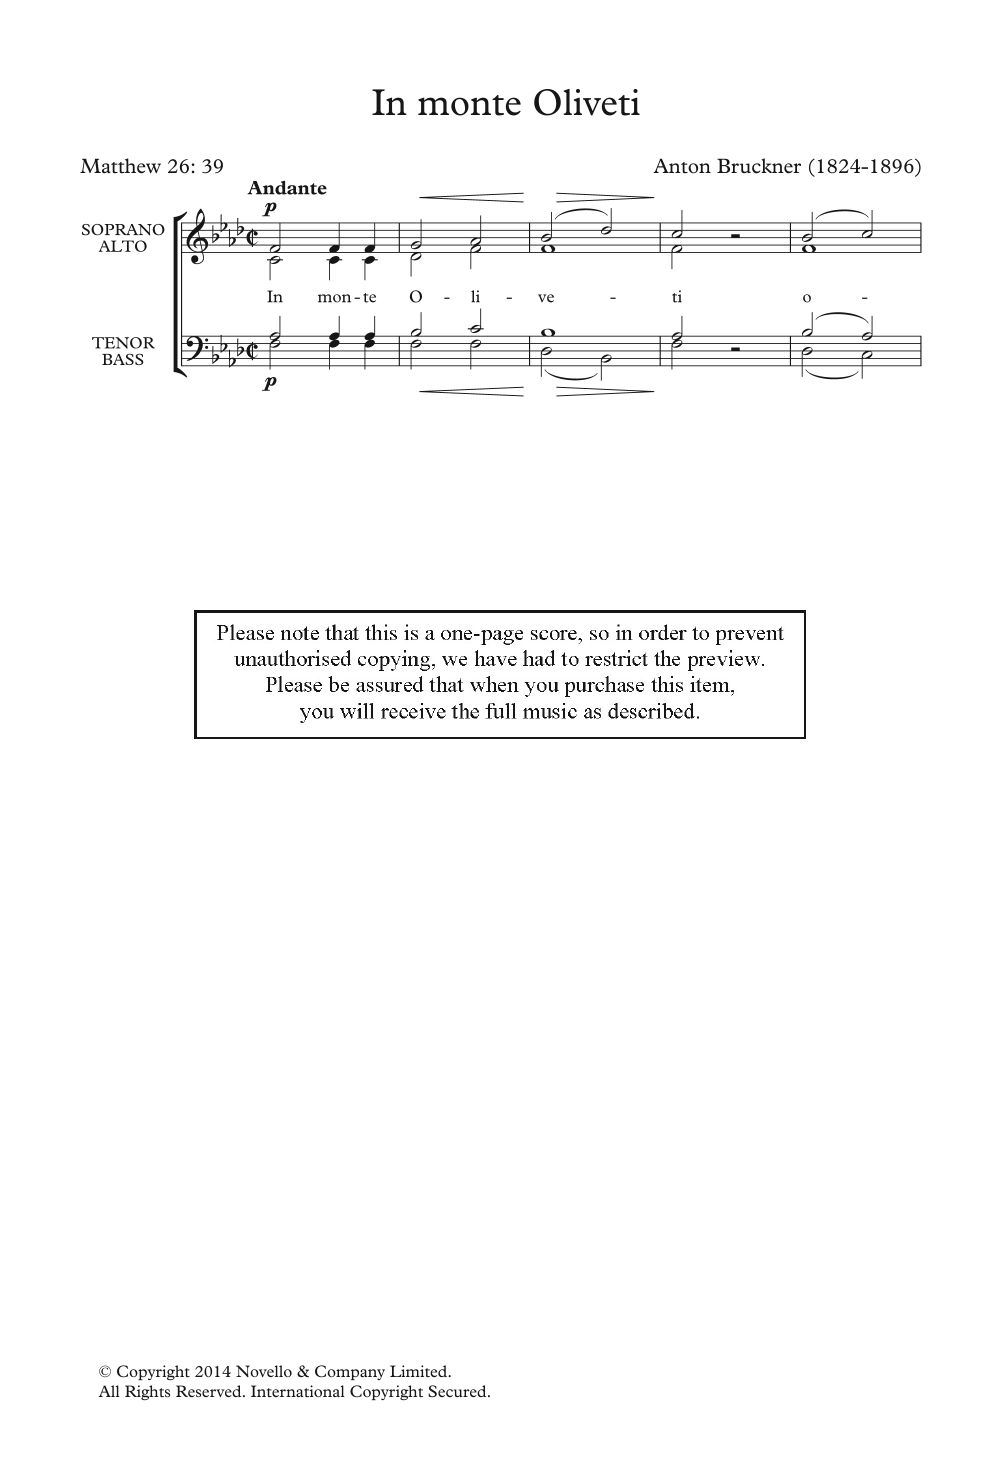 Anton Bruckner In Monte Oliveti Sheet Music Notes & Chords for SATB - Download or Print PDF